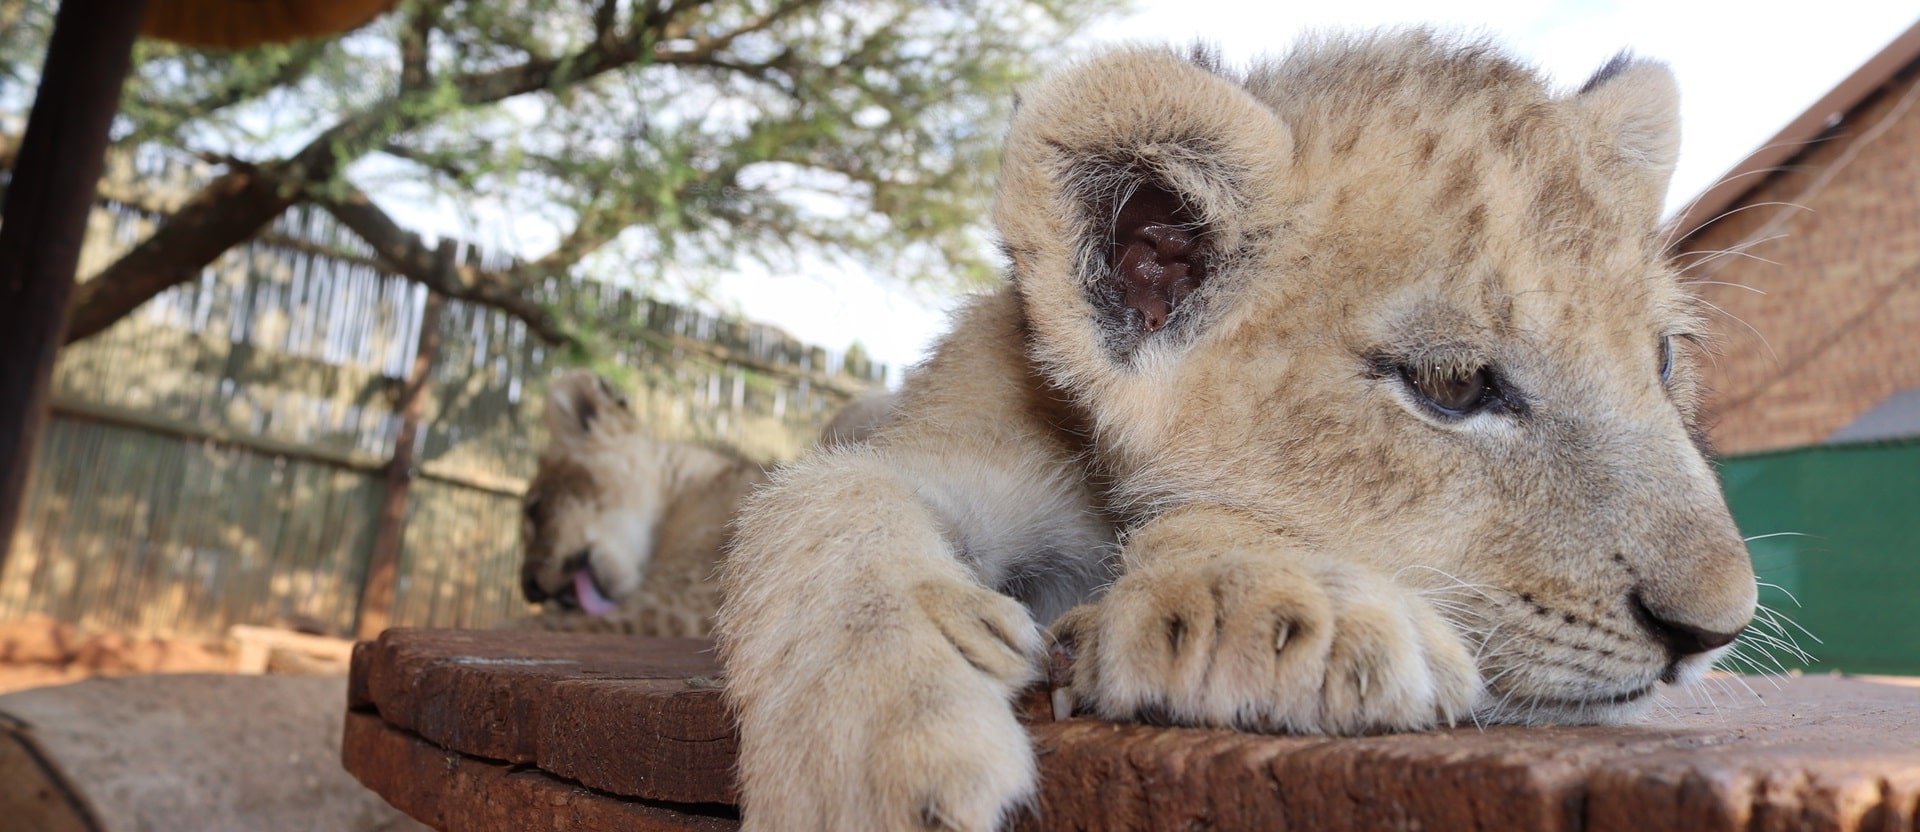 Lion cub at South Africa venue